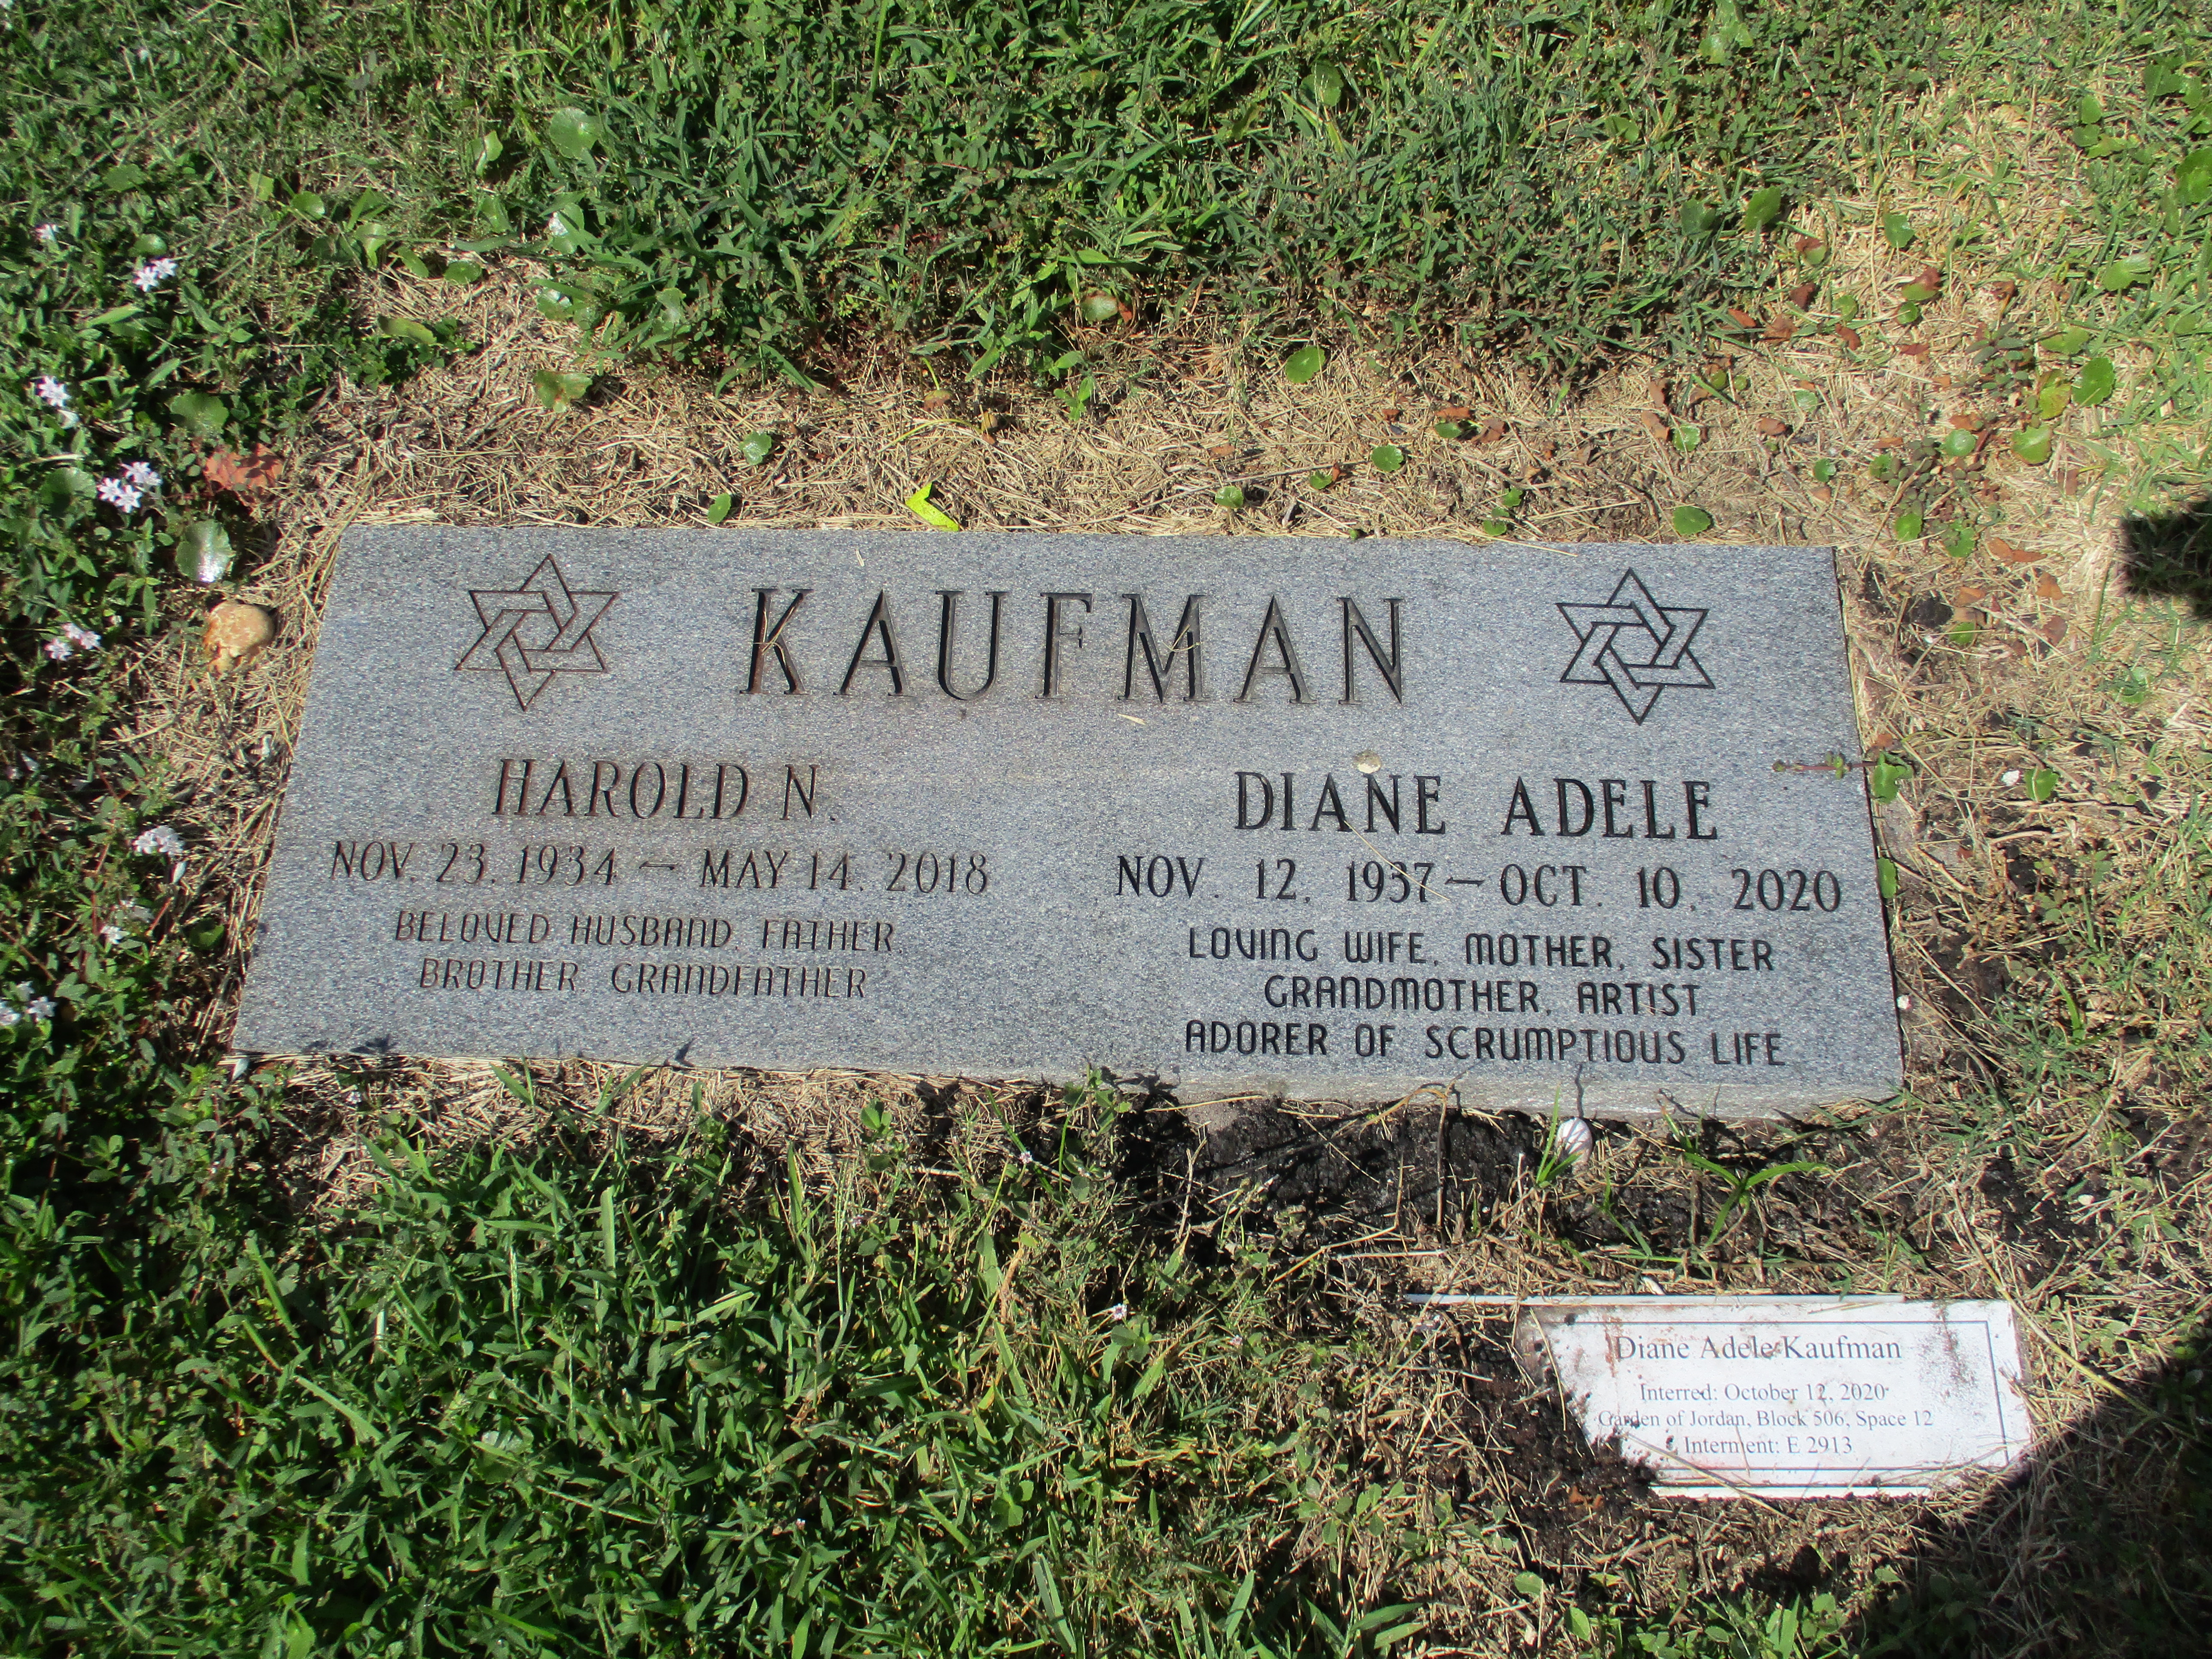 Diane Adele Kaufman